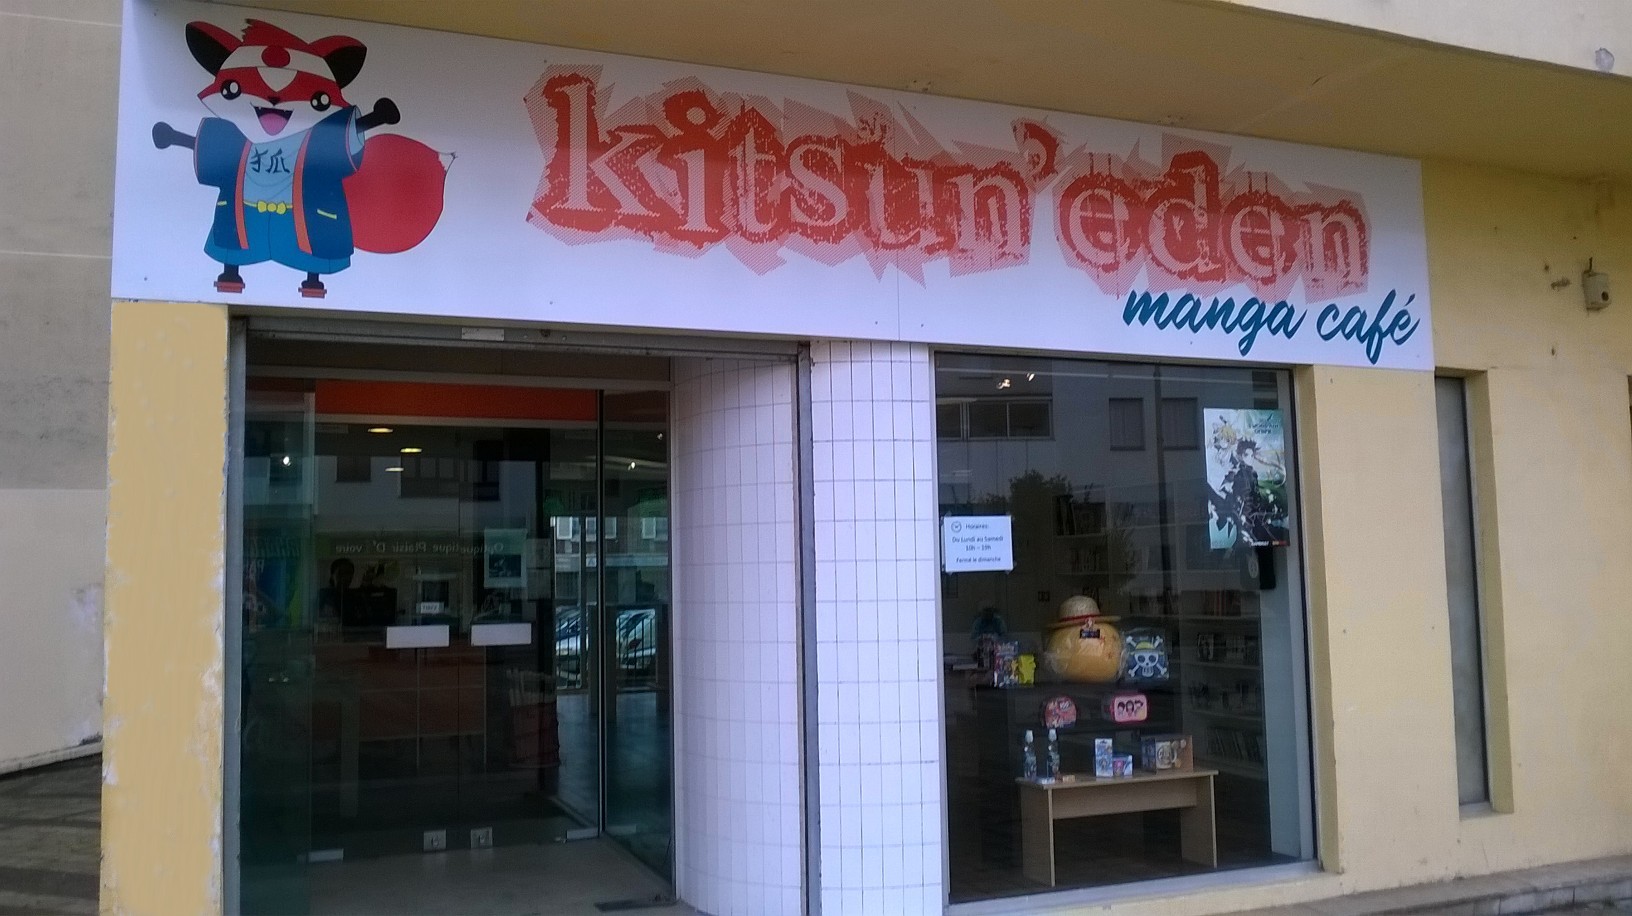 Kitsun'Eden Manga Café